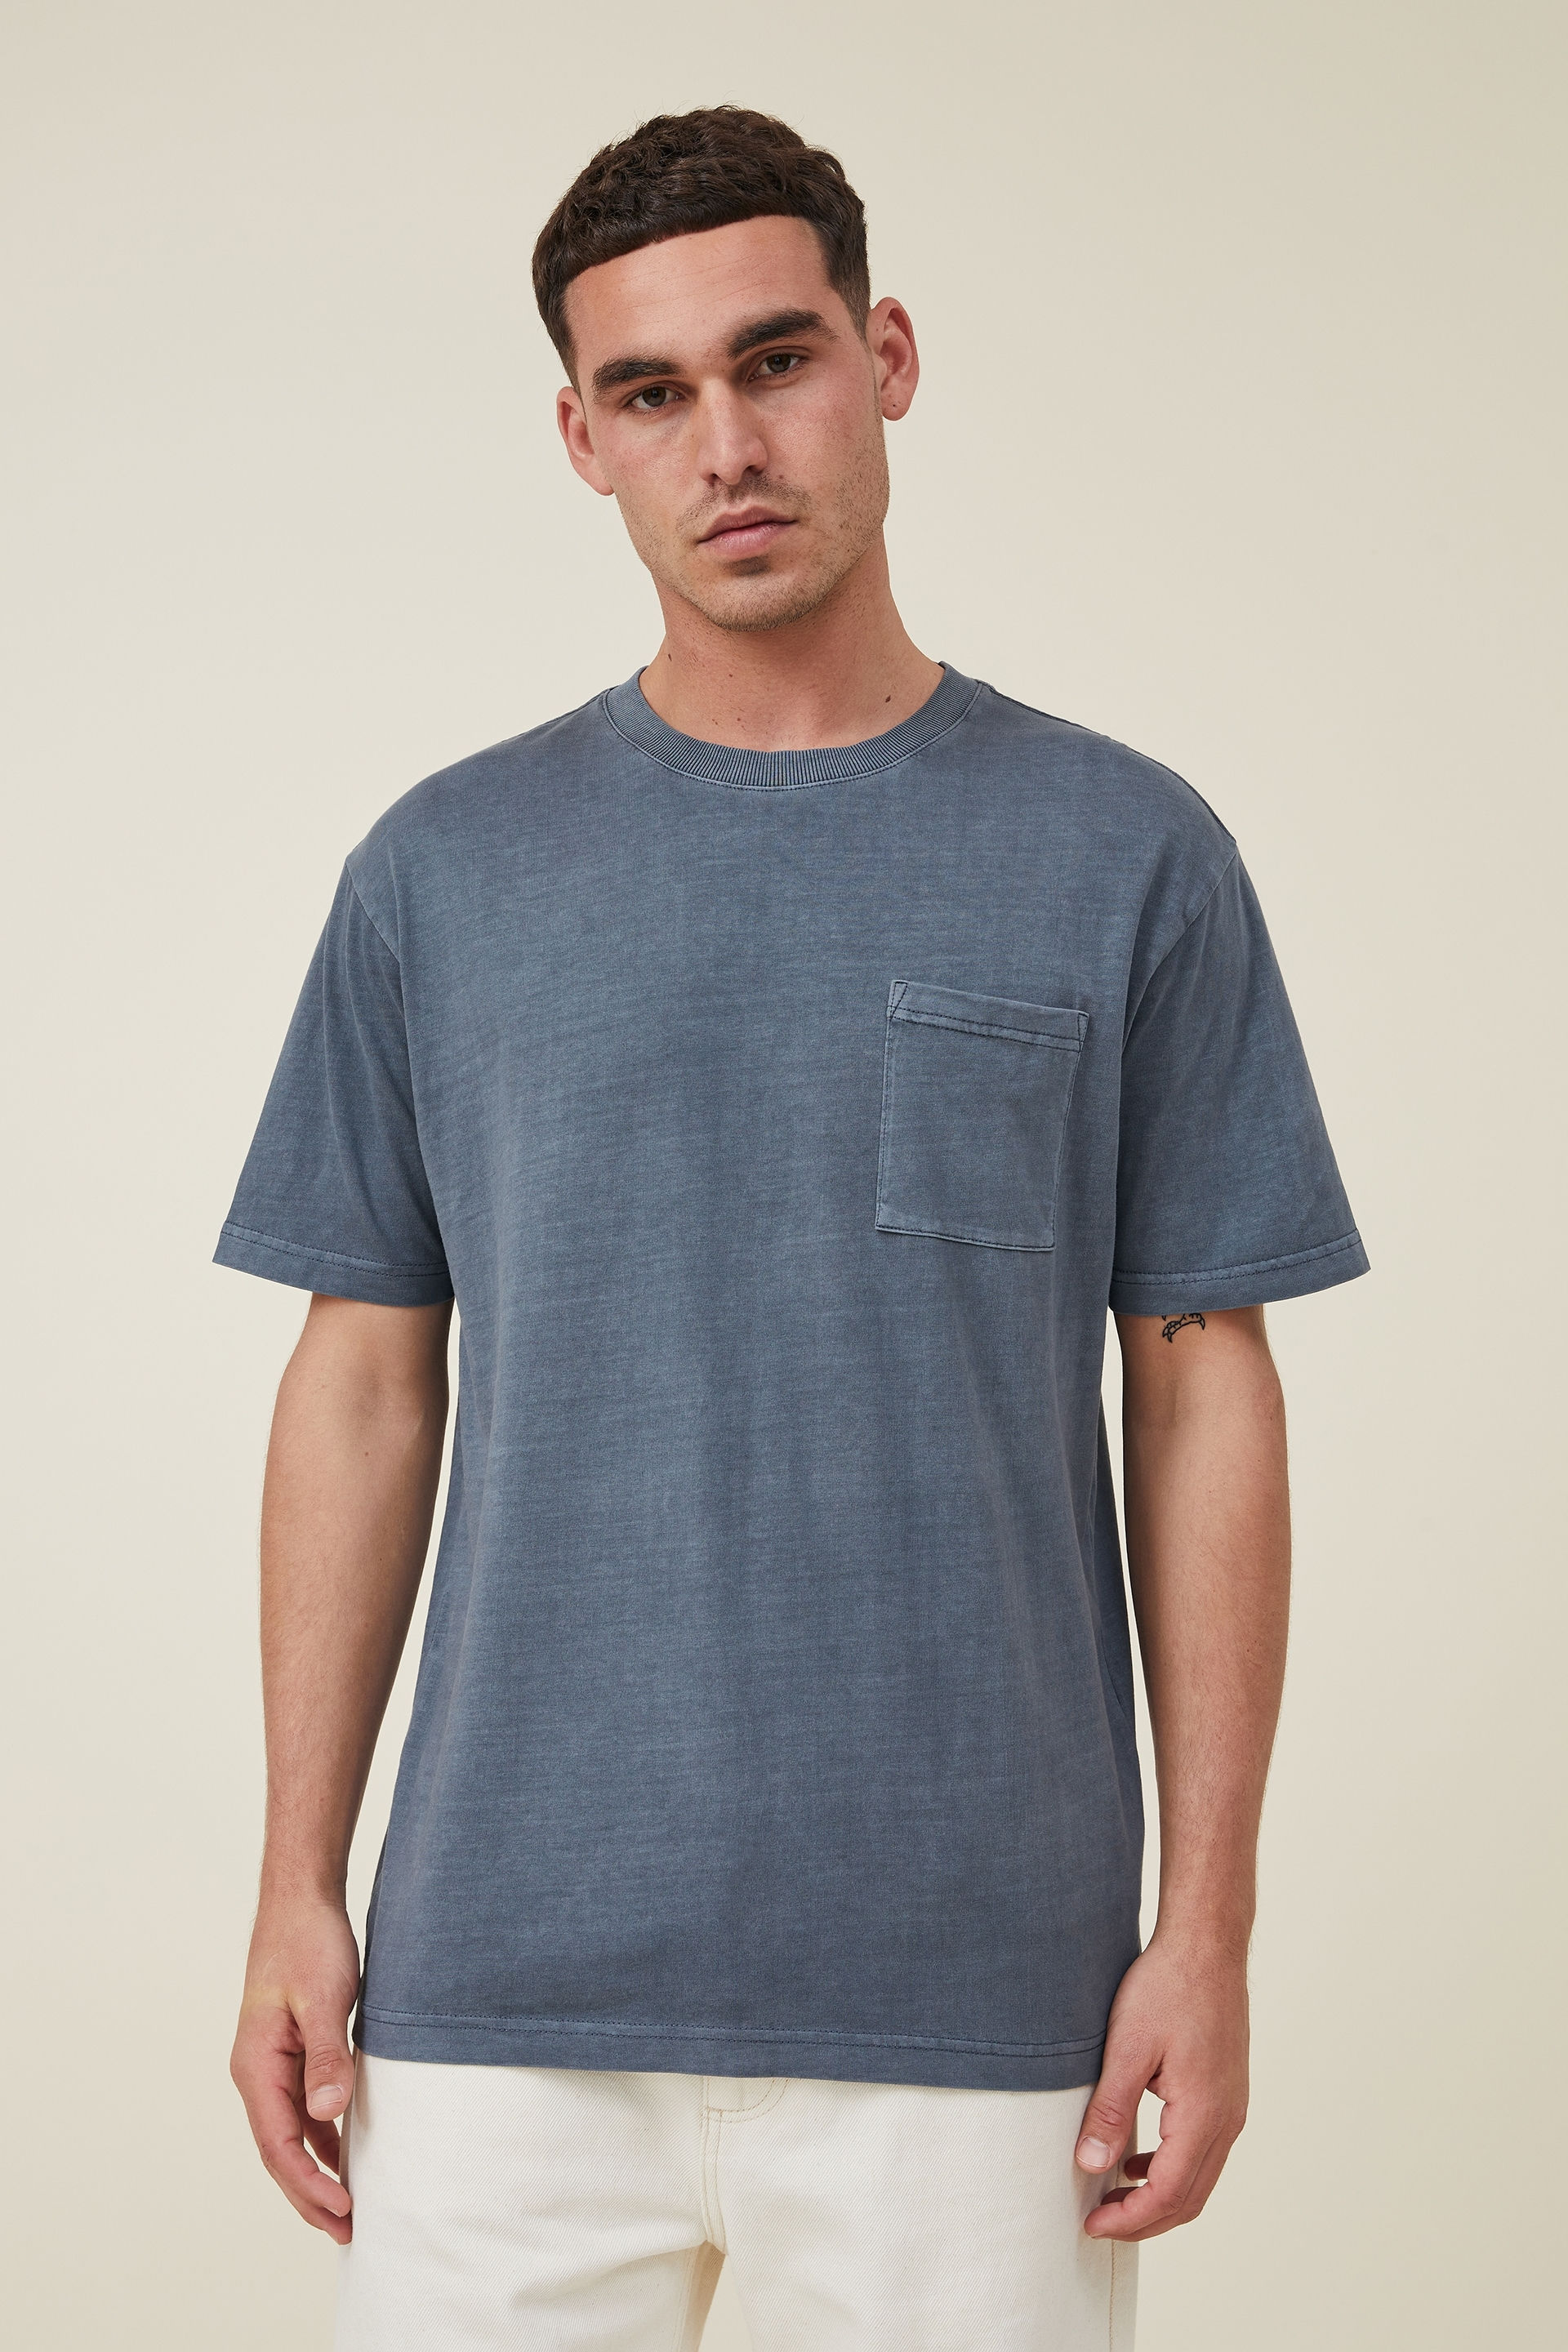 Cotton On Men - Organic Loose Fit T-Shirt - Dusty denim